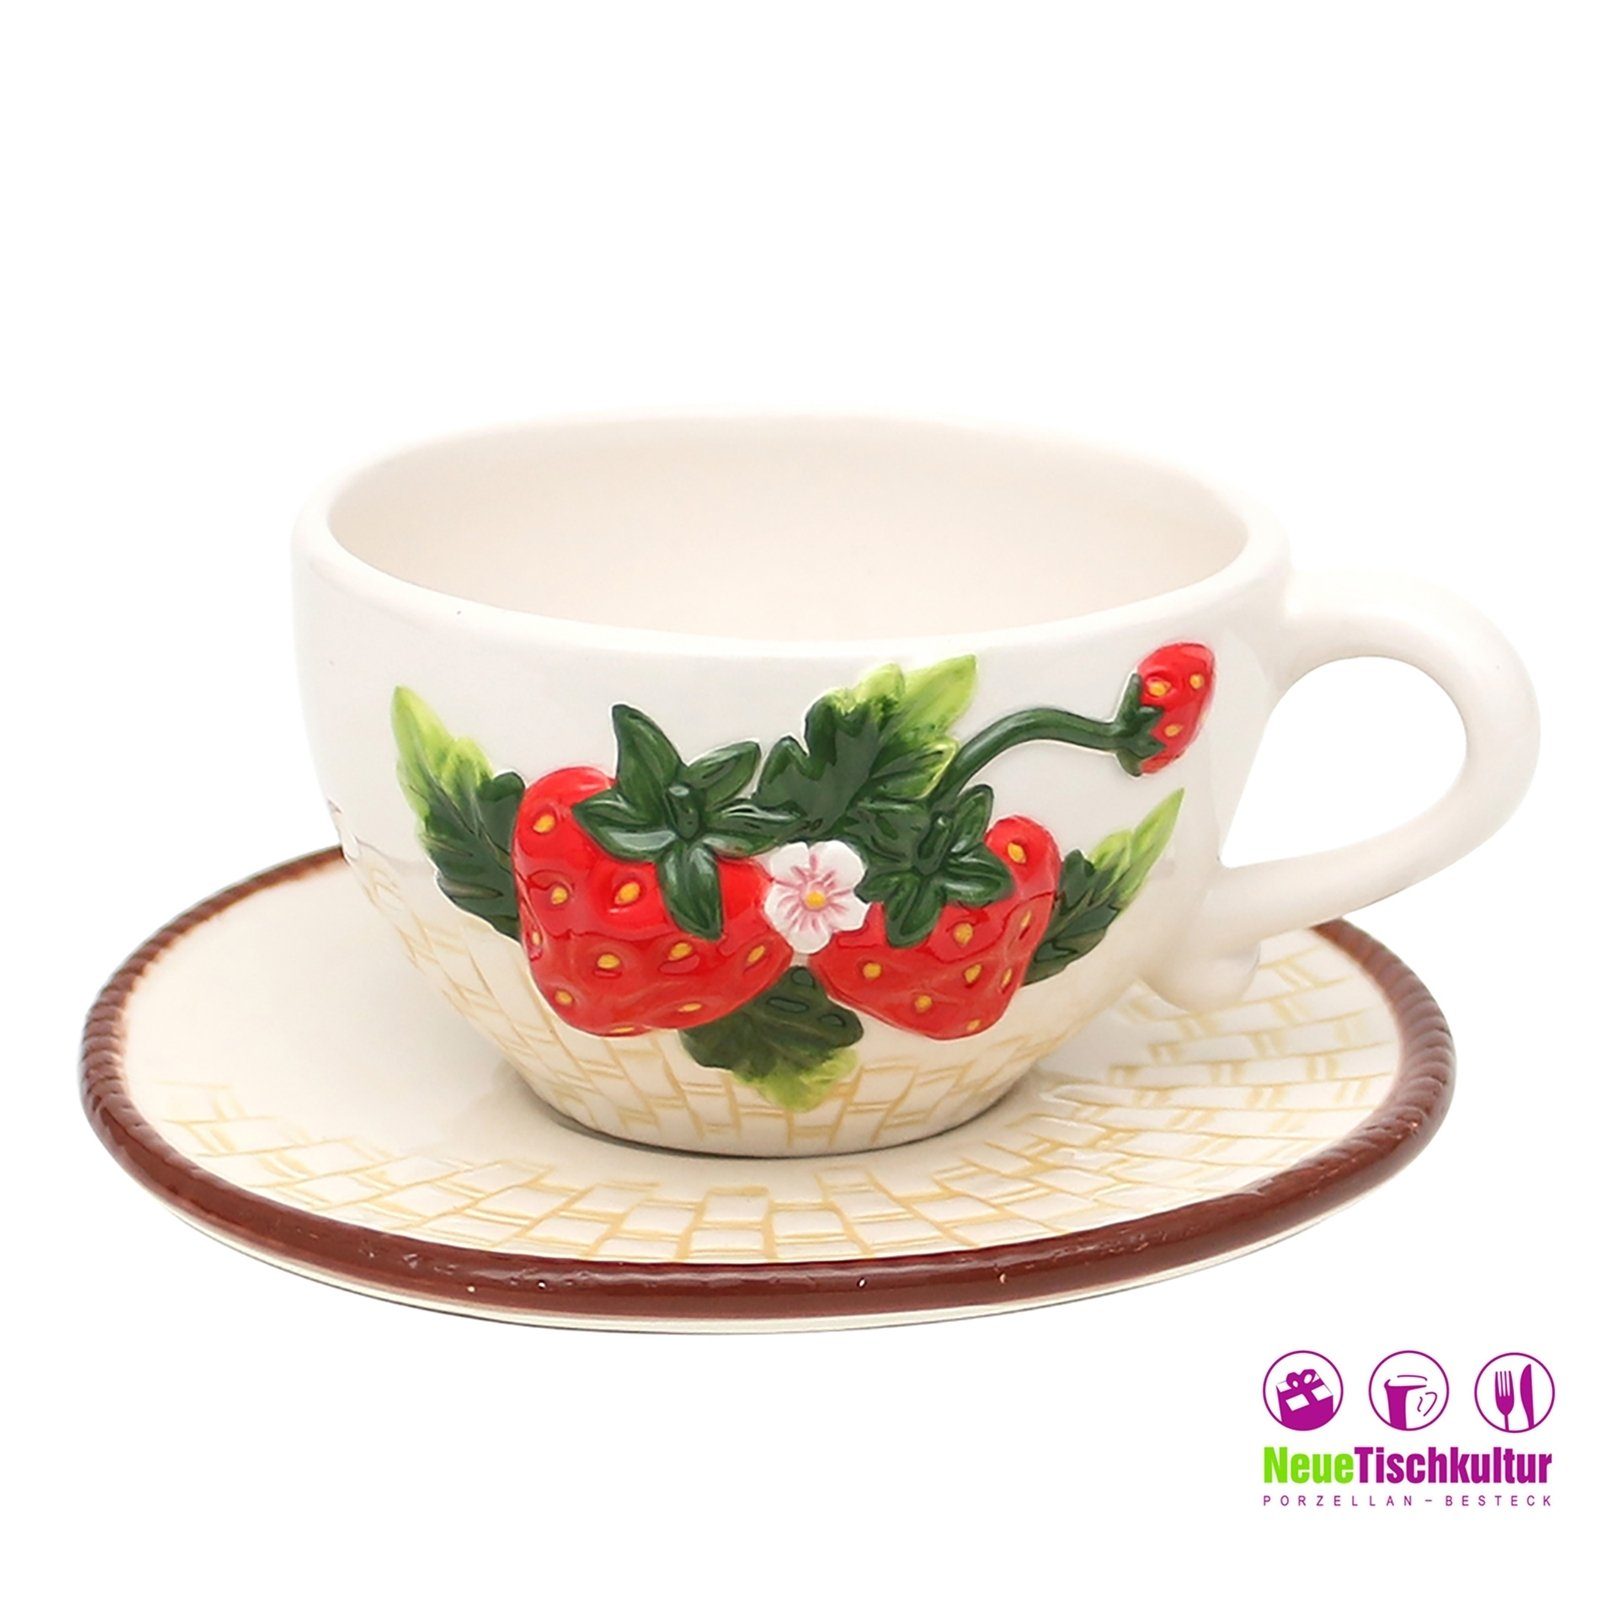 Keramik Untertasse Neuetischkultur Tasse mit Kaffeetasse Erdbeere,